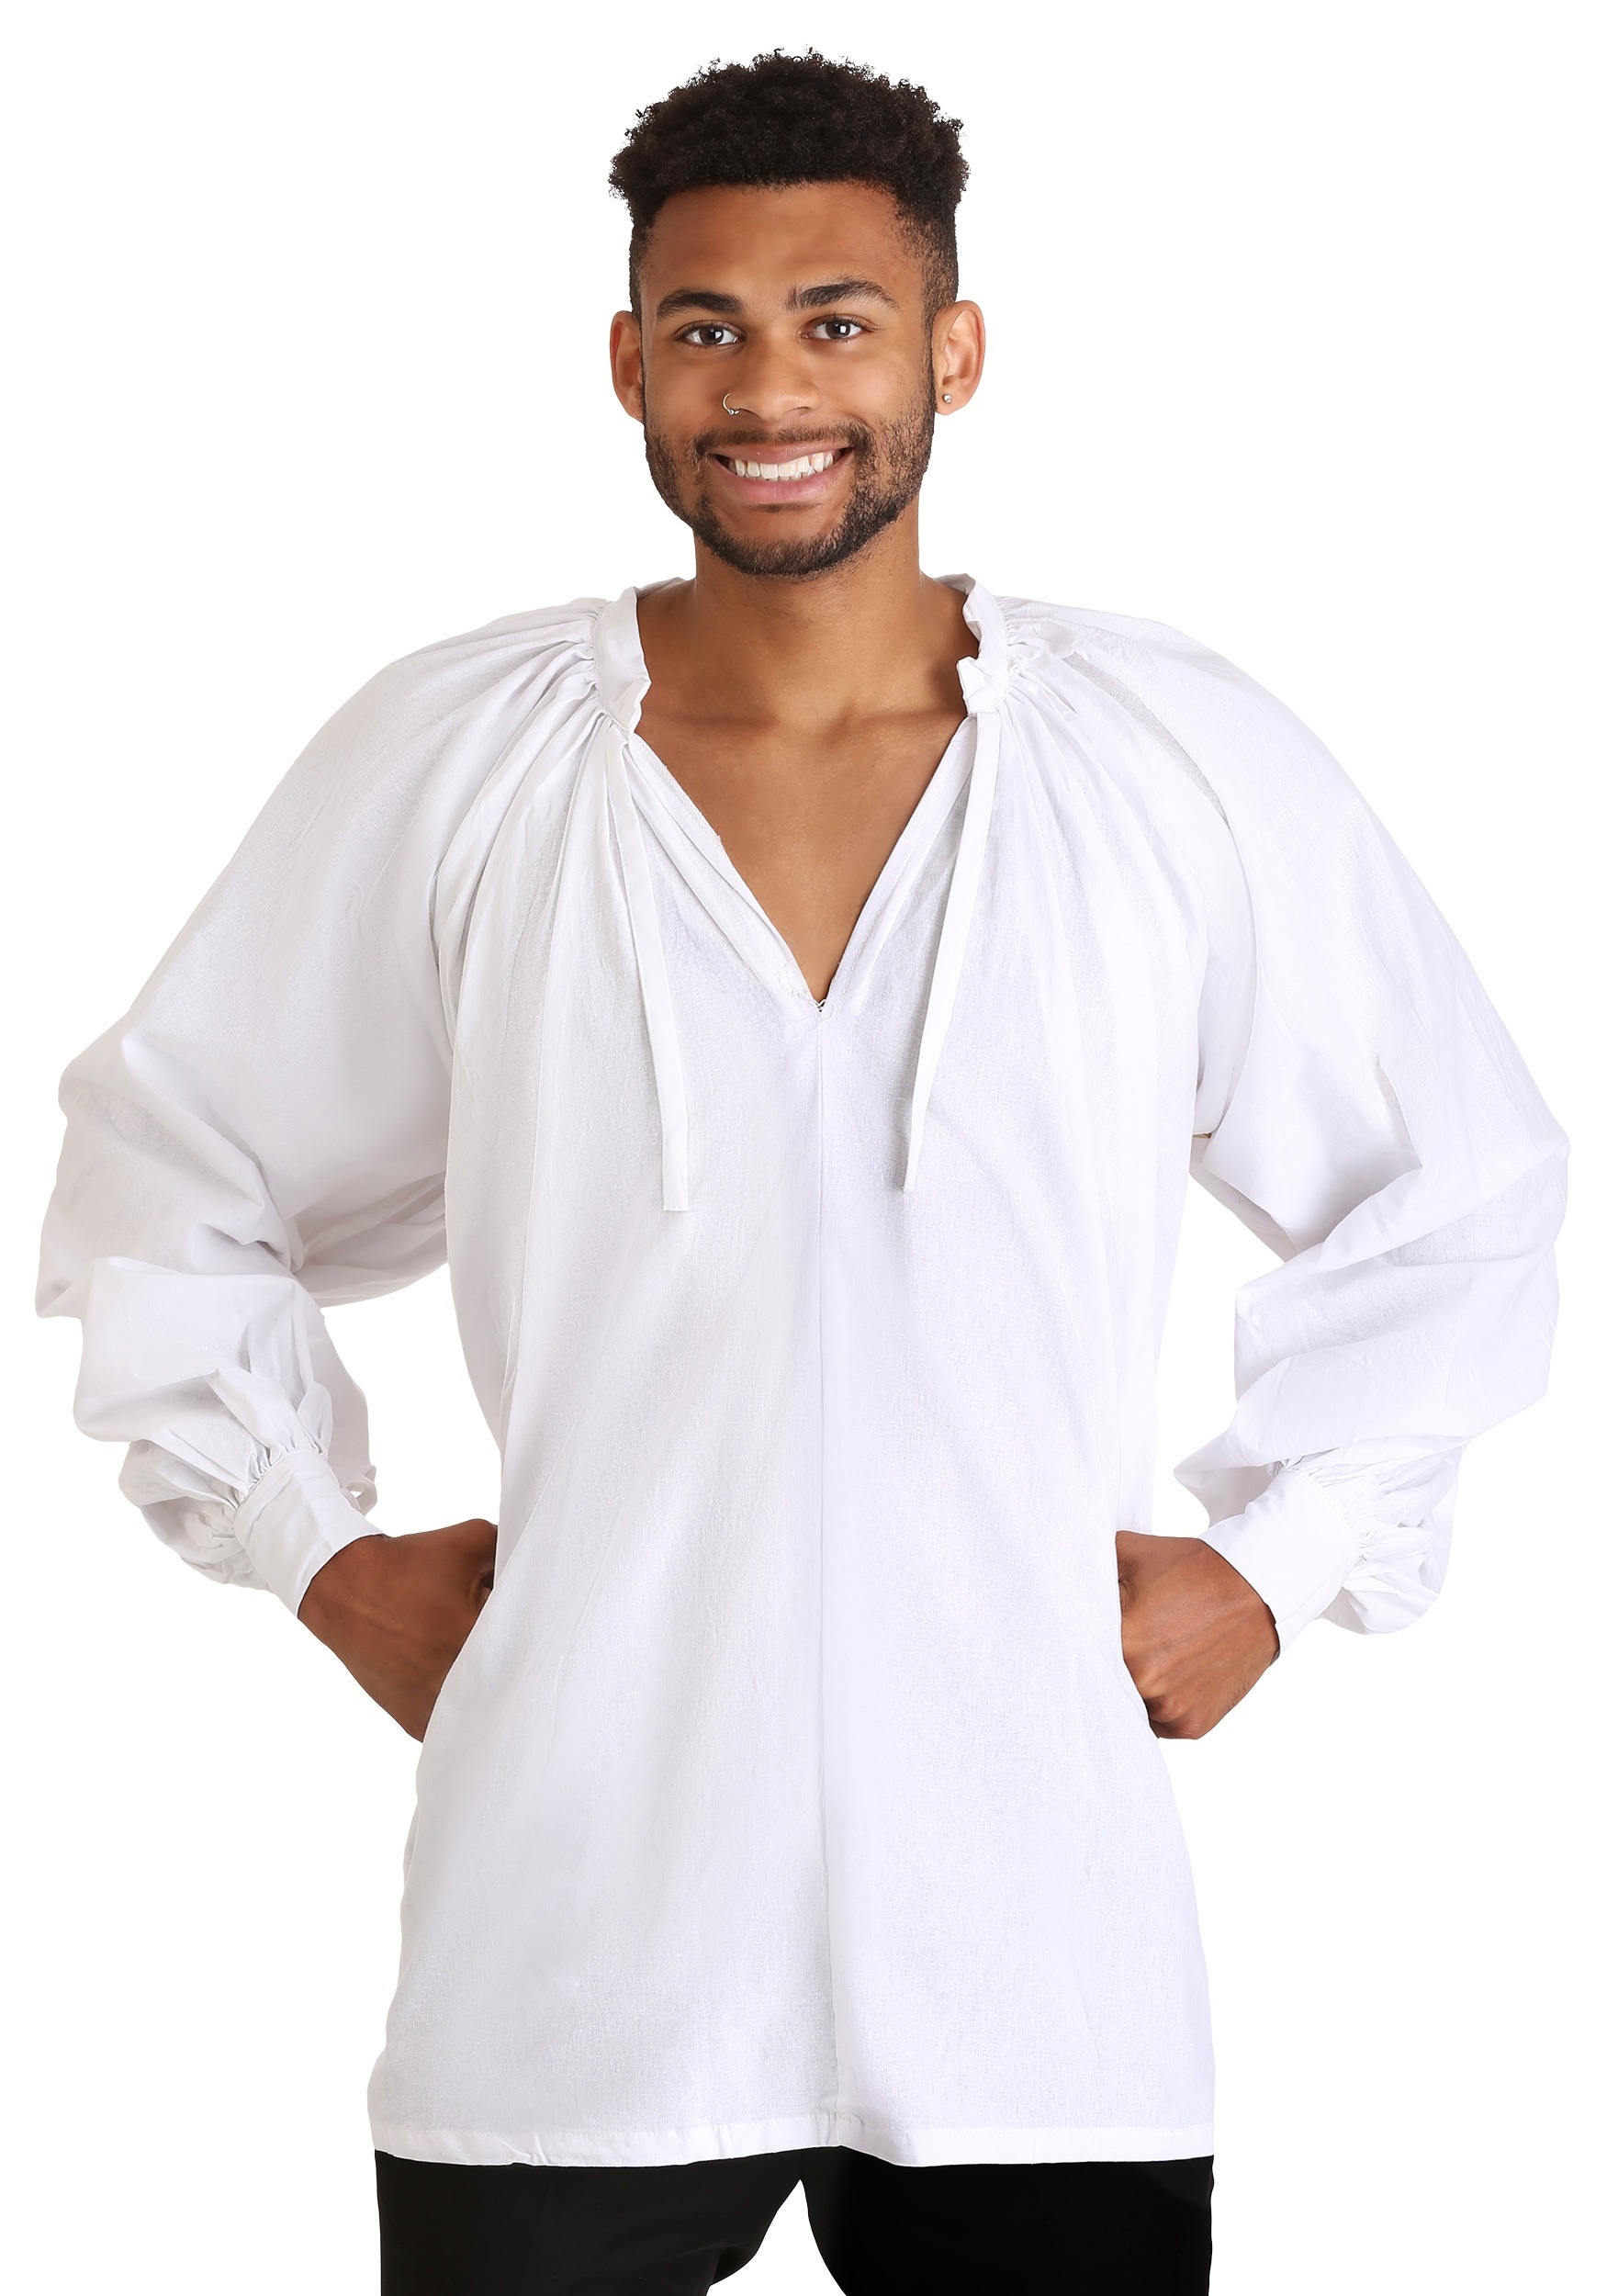 Pirate Shirt Renaissance SCA POTC White Custom Your Size Free 